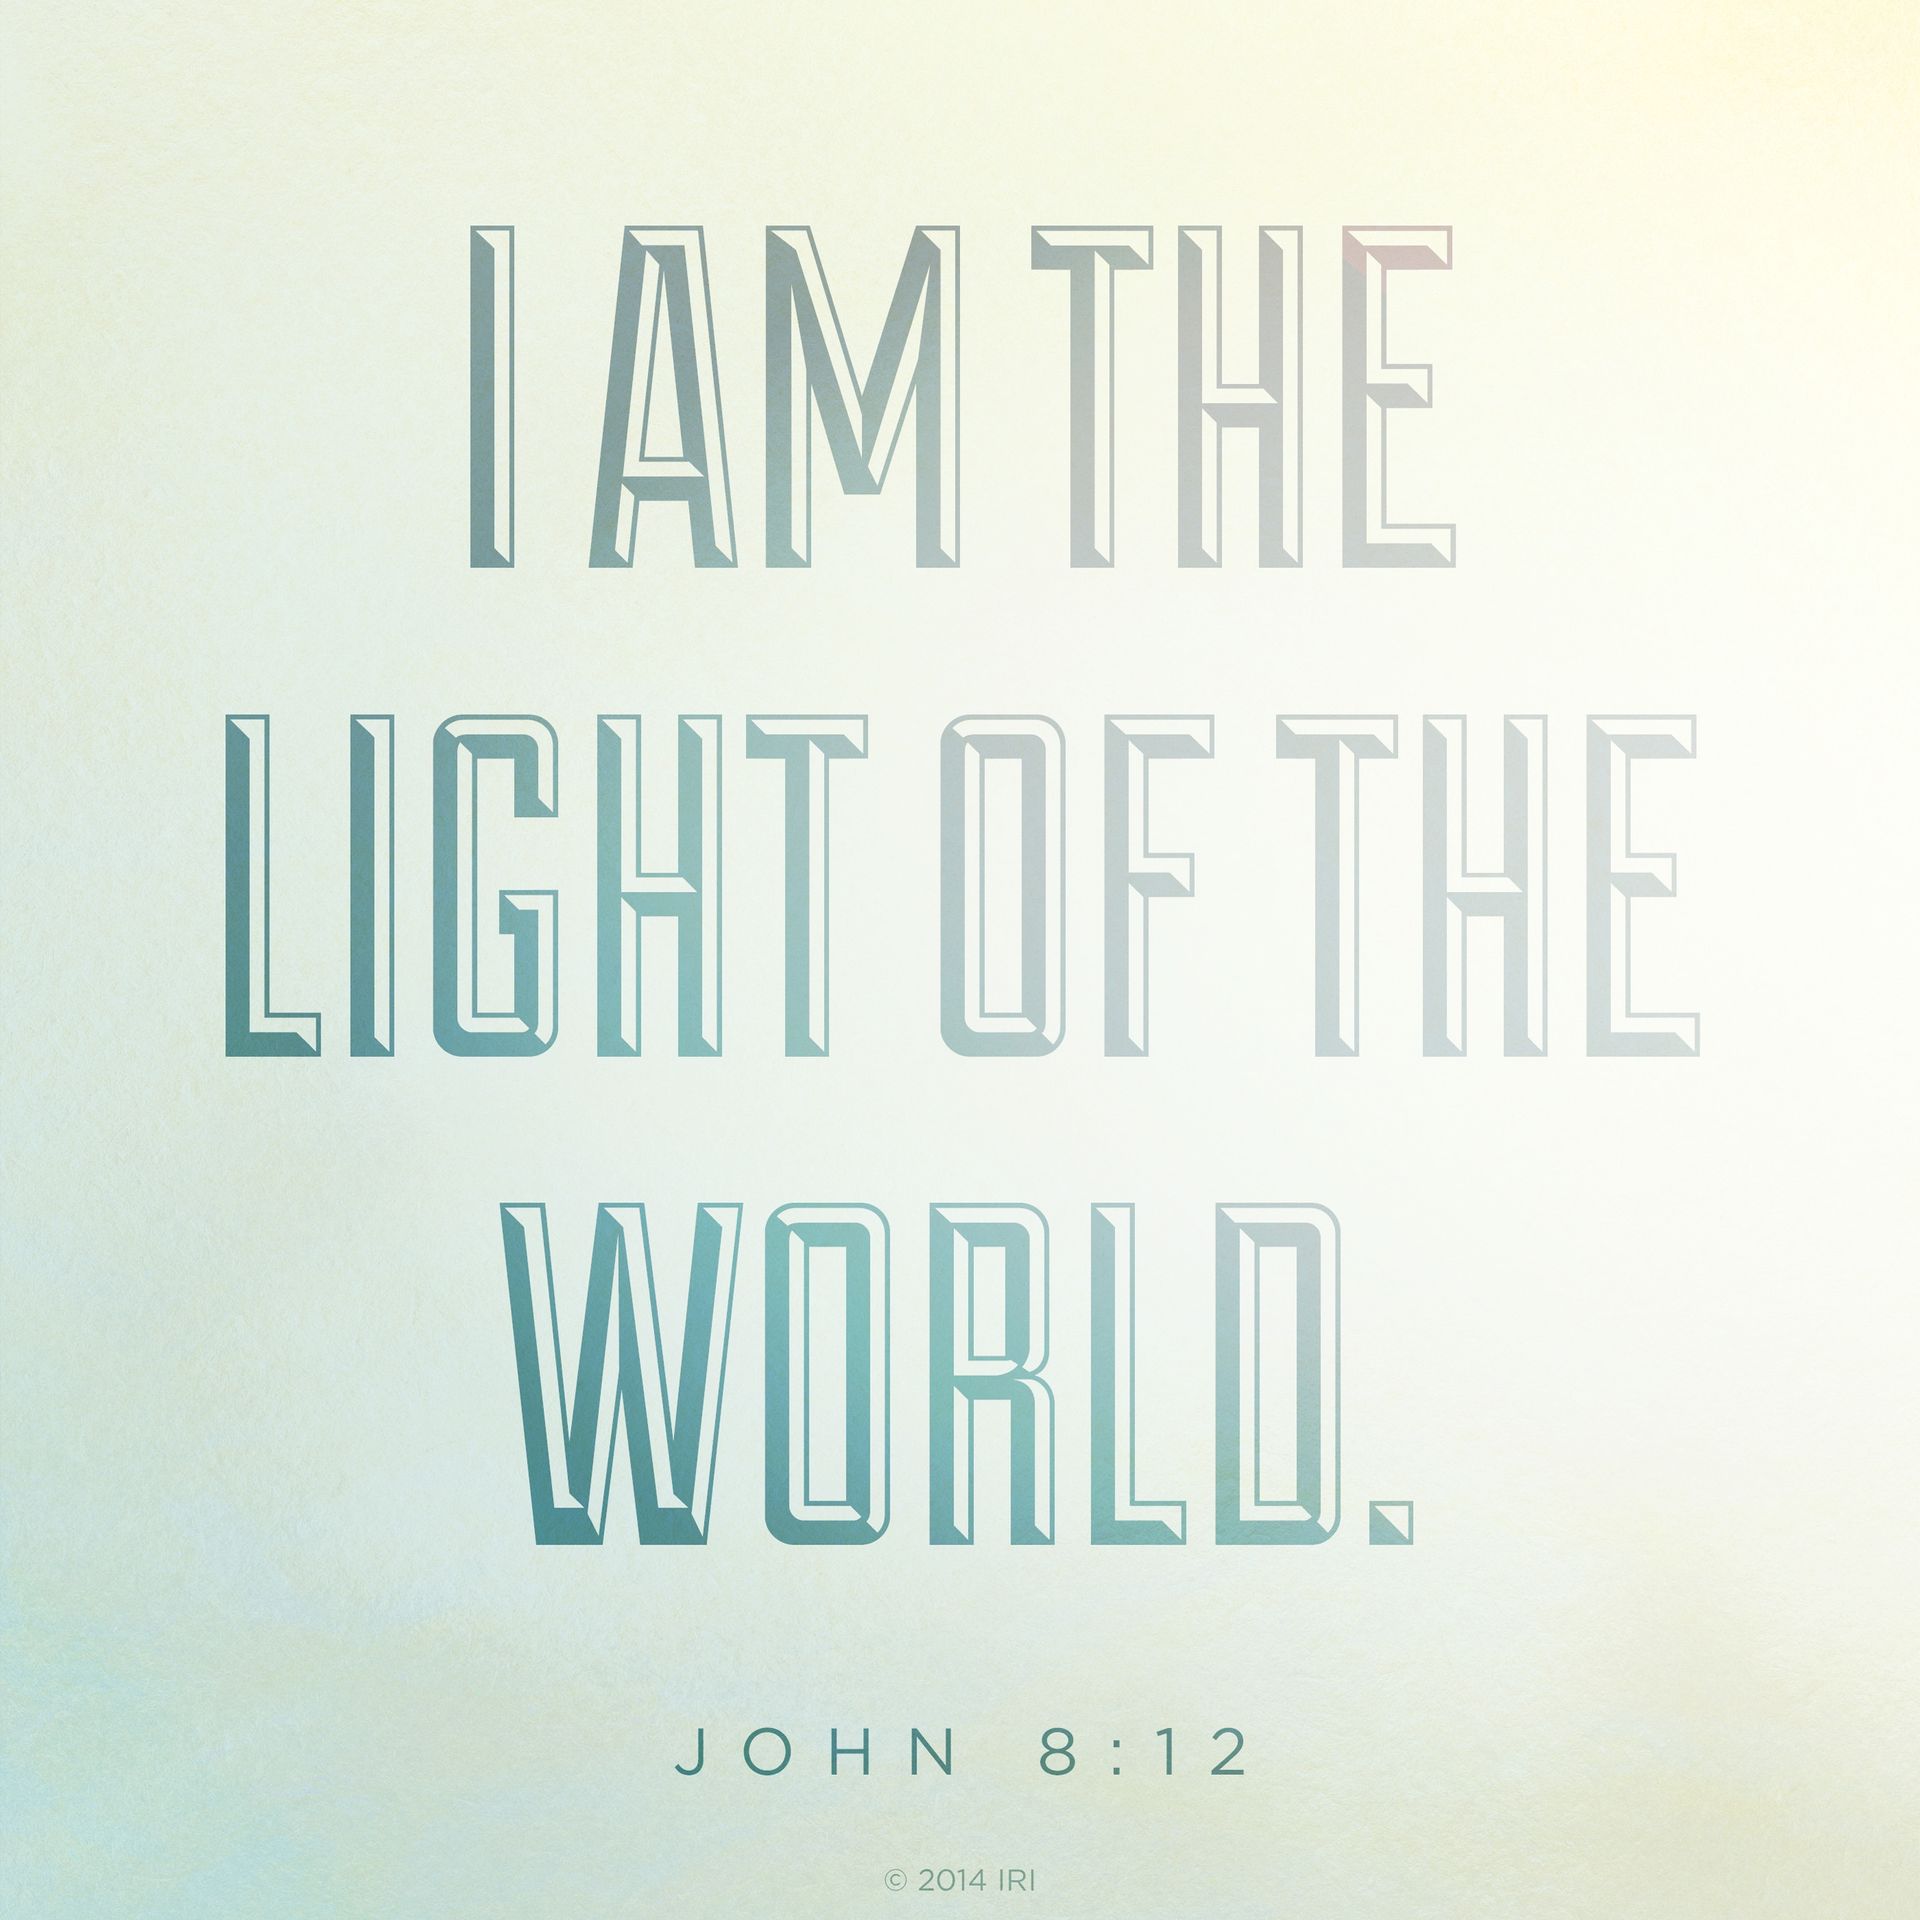 “I am the light of the world.”—John 8:12